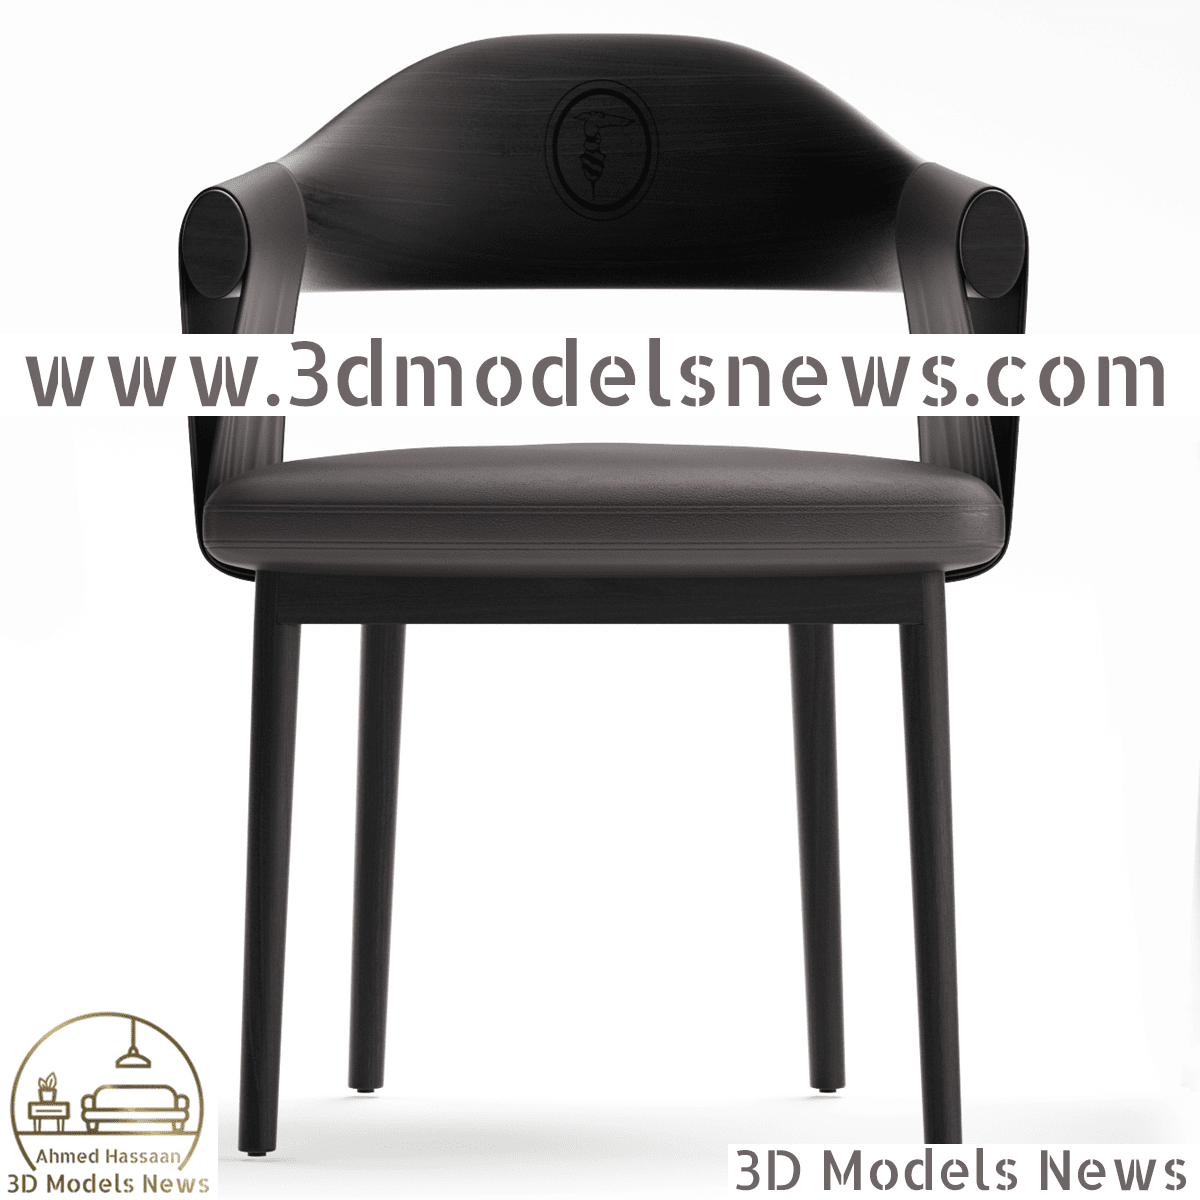 Trussardi Casa Larzia Table and Chair Model 3